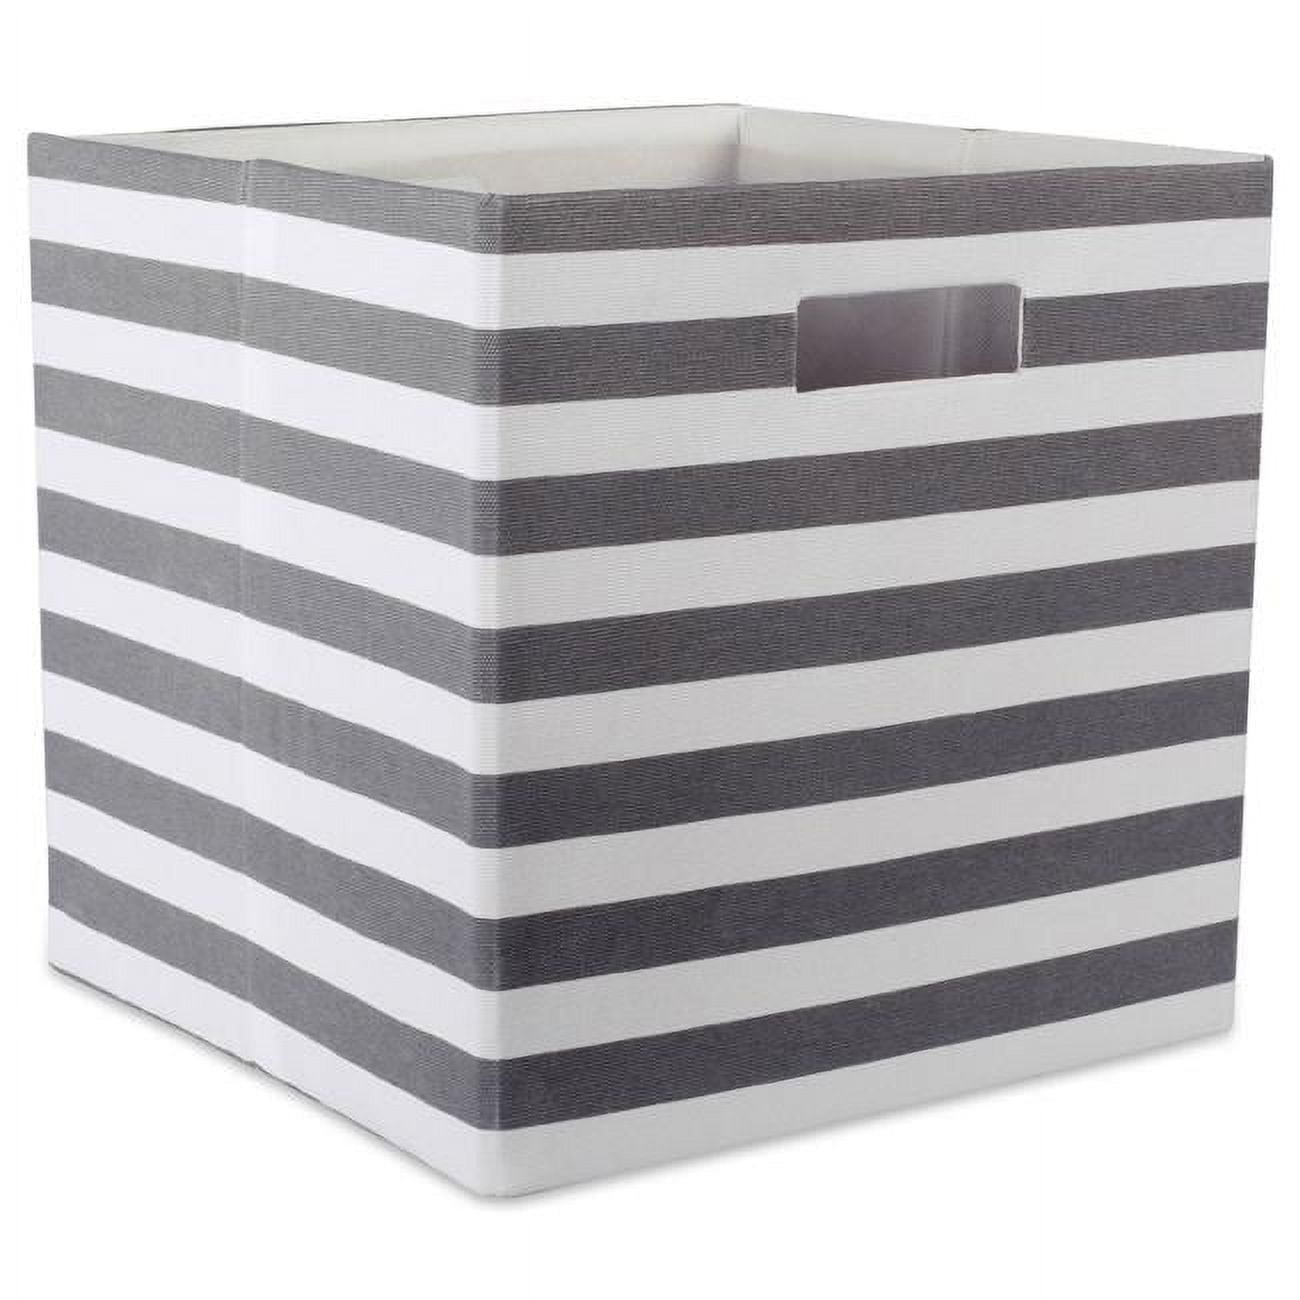 Design Imports Camz36648 11 X 11 X 11 In. Stripe Square Polyester Storage Cube, Grey